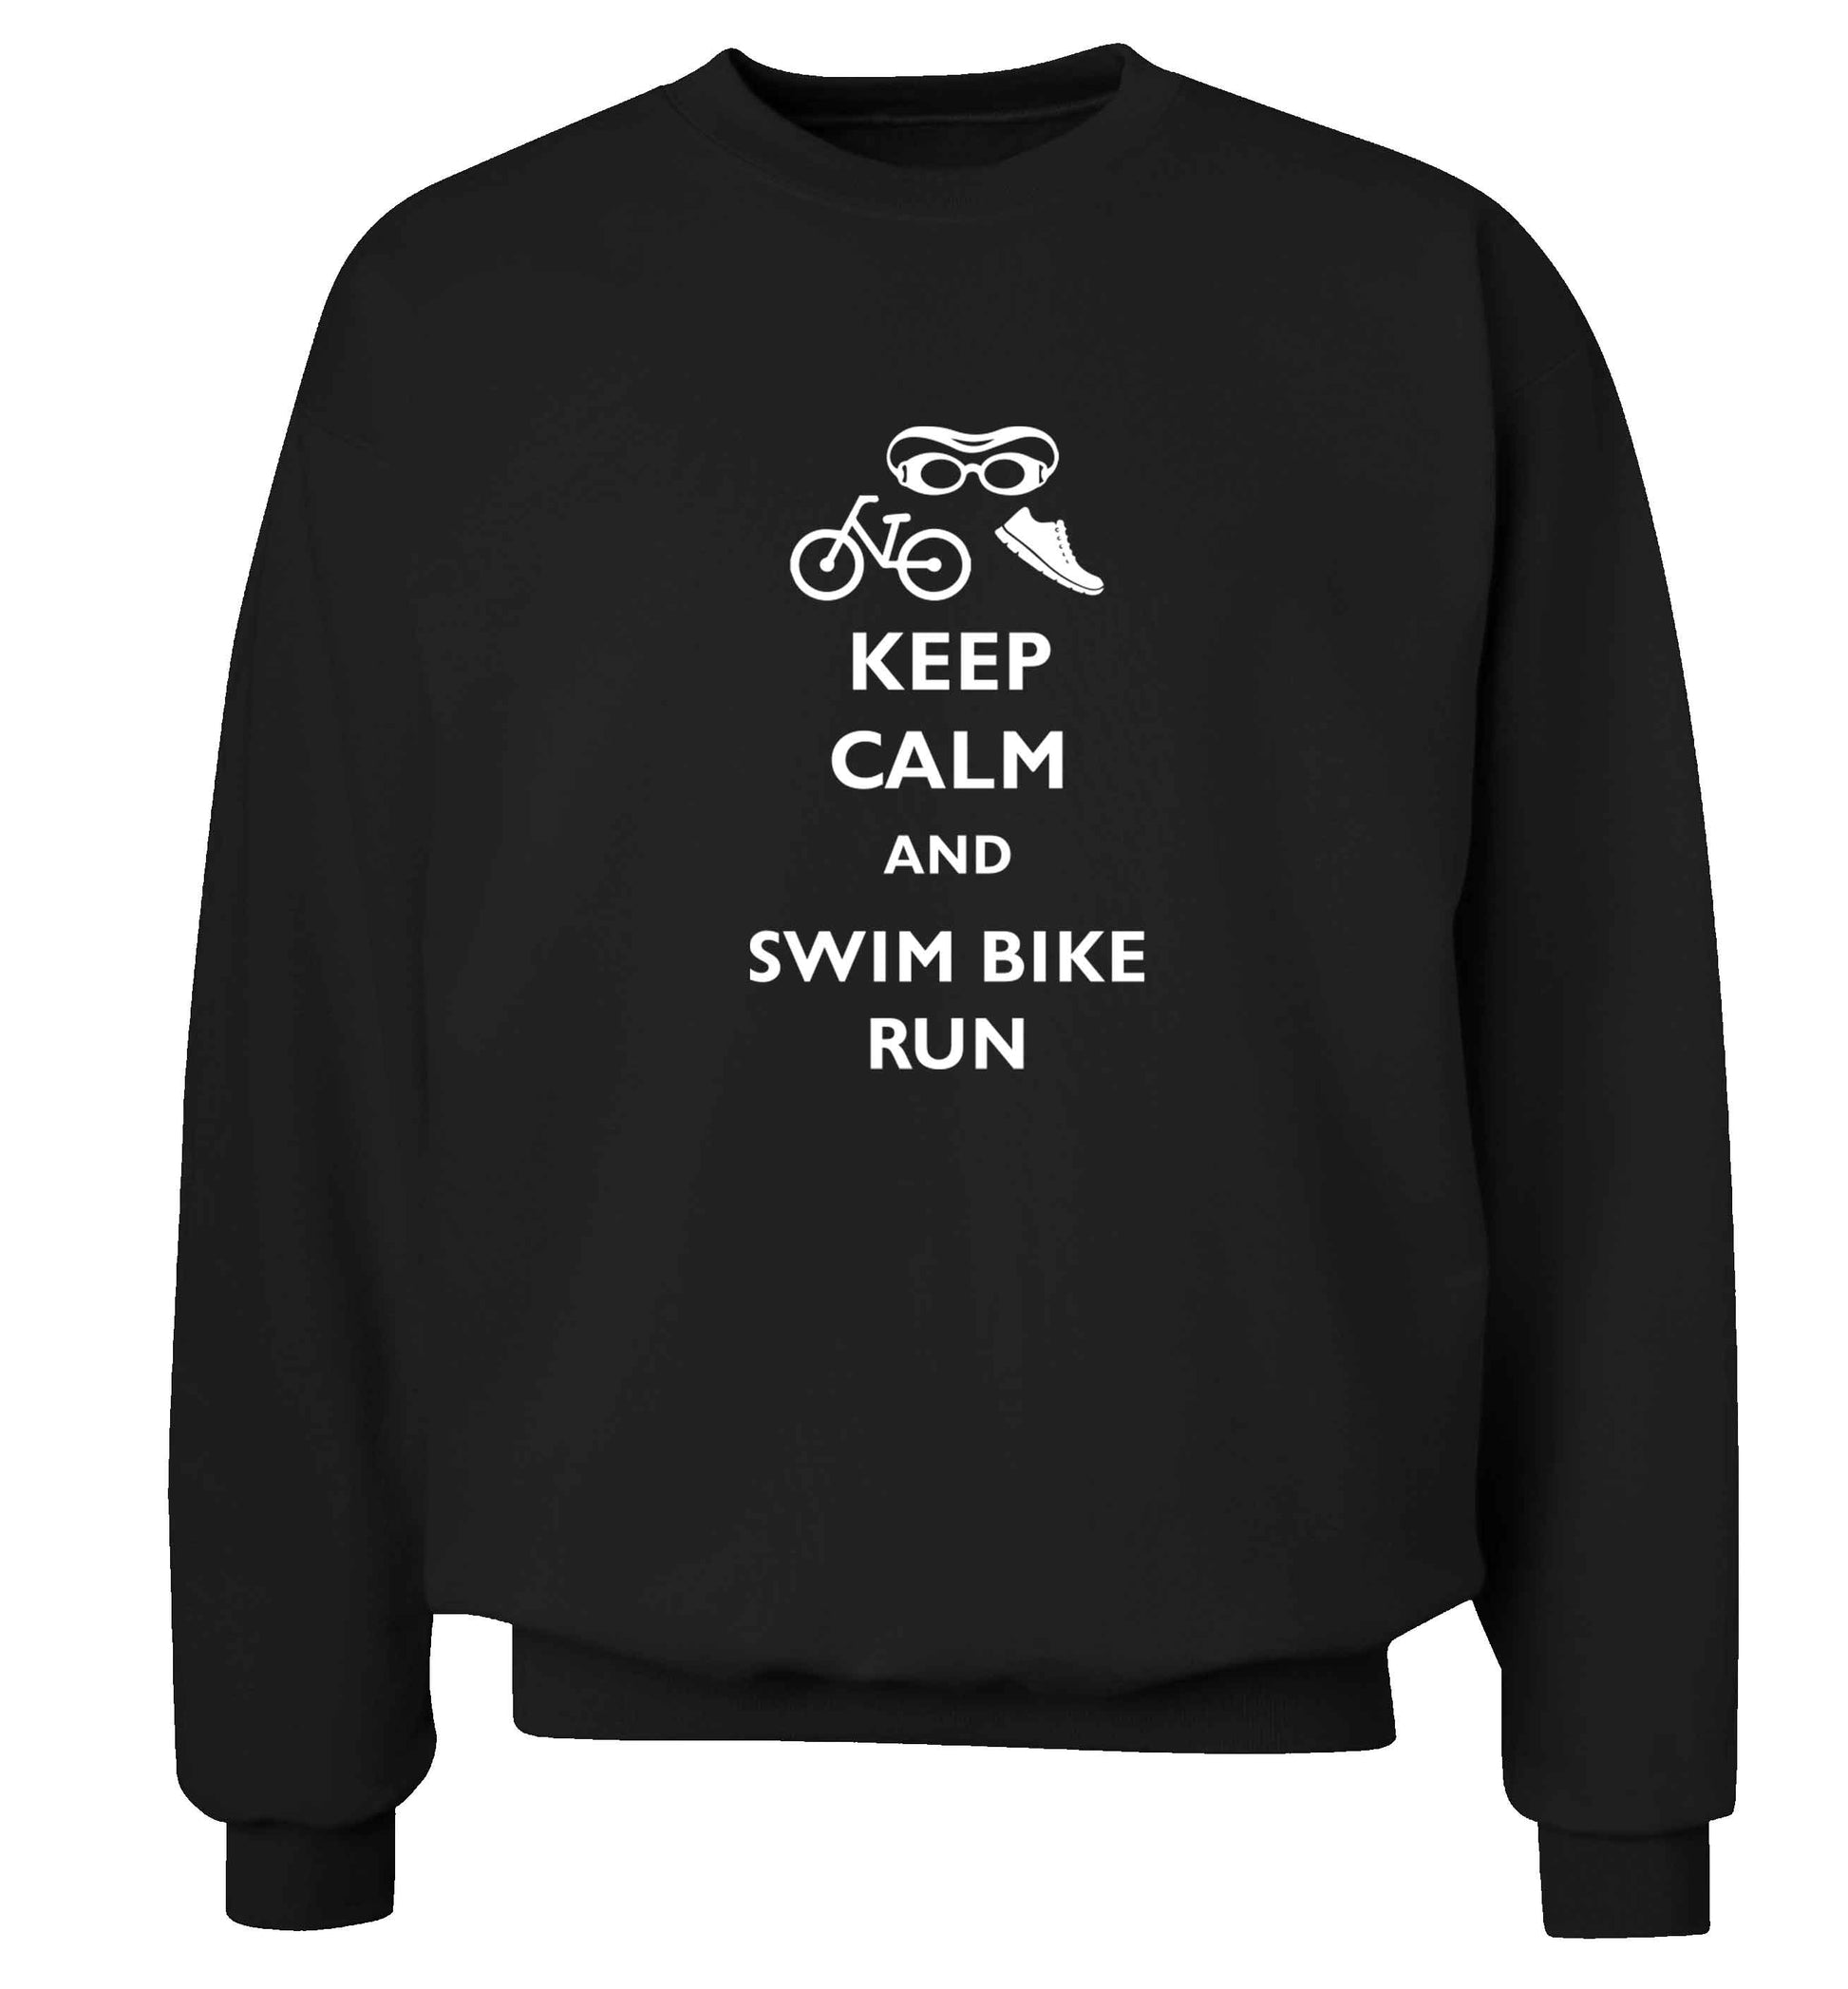 Keep calm and swim bike run adult's unisex black sweater 2XL